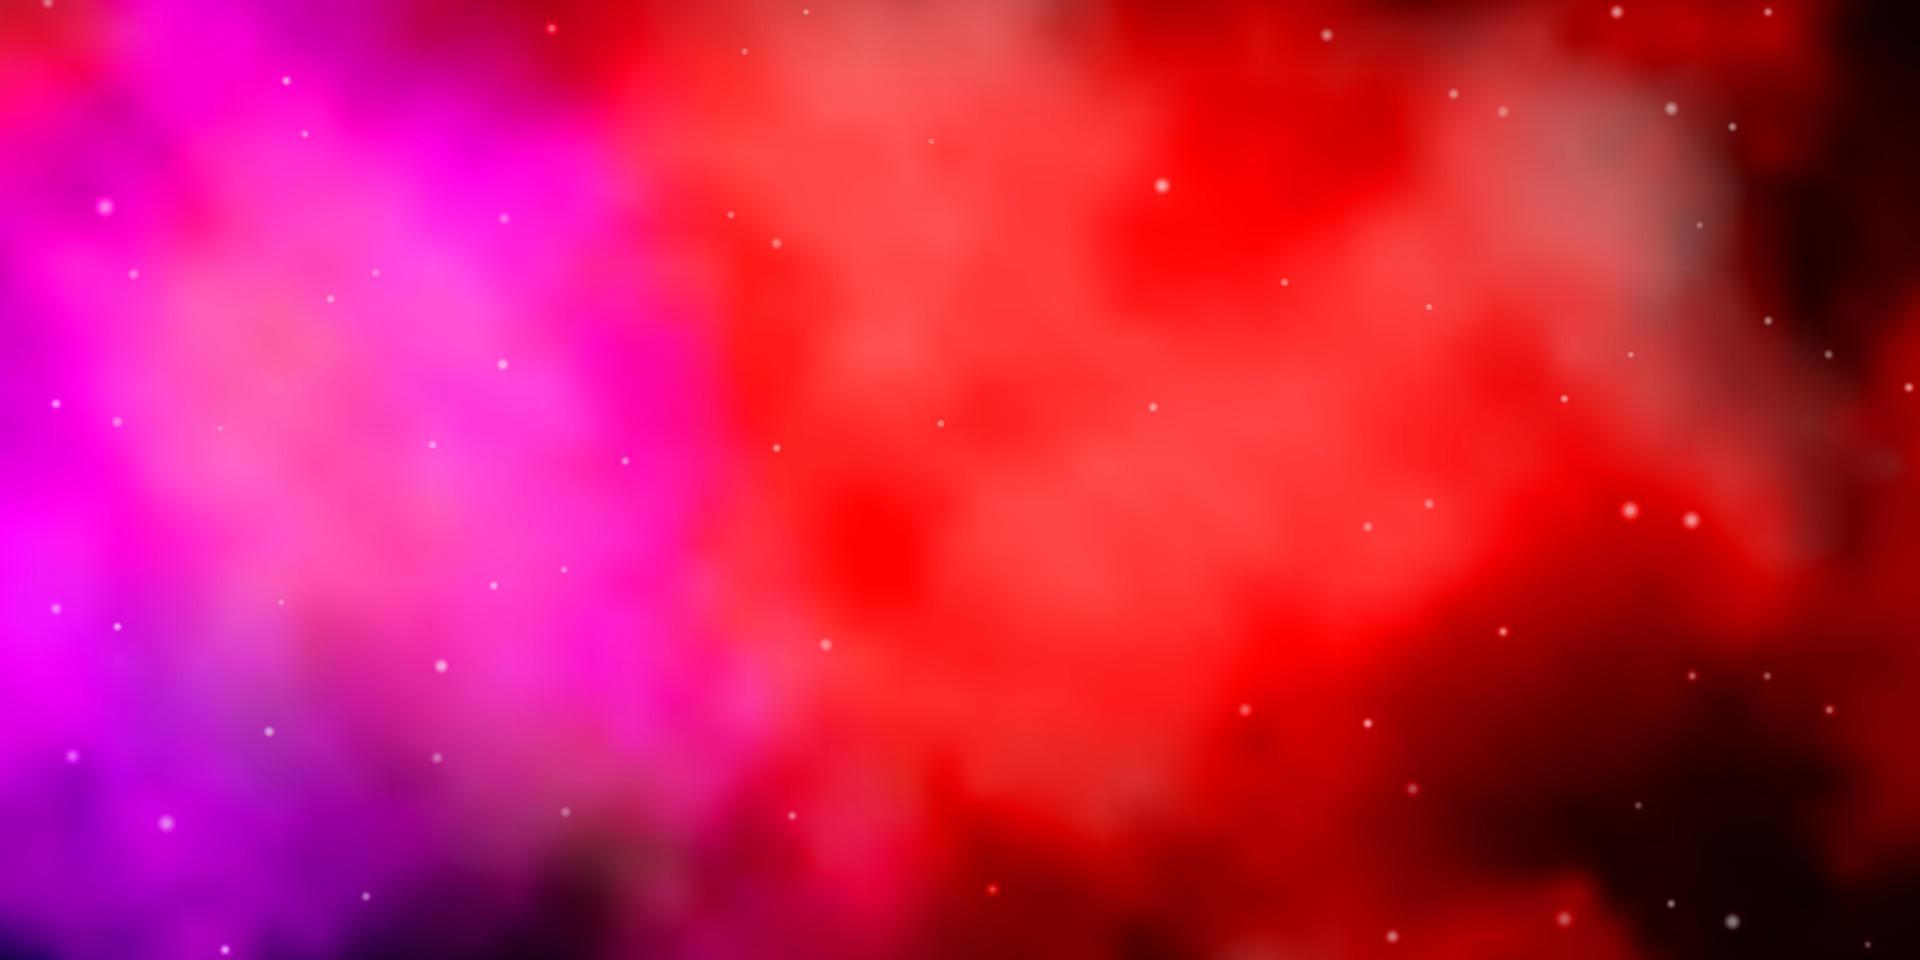 Dark Pink, Yellow vector texture with beautiful stars.